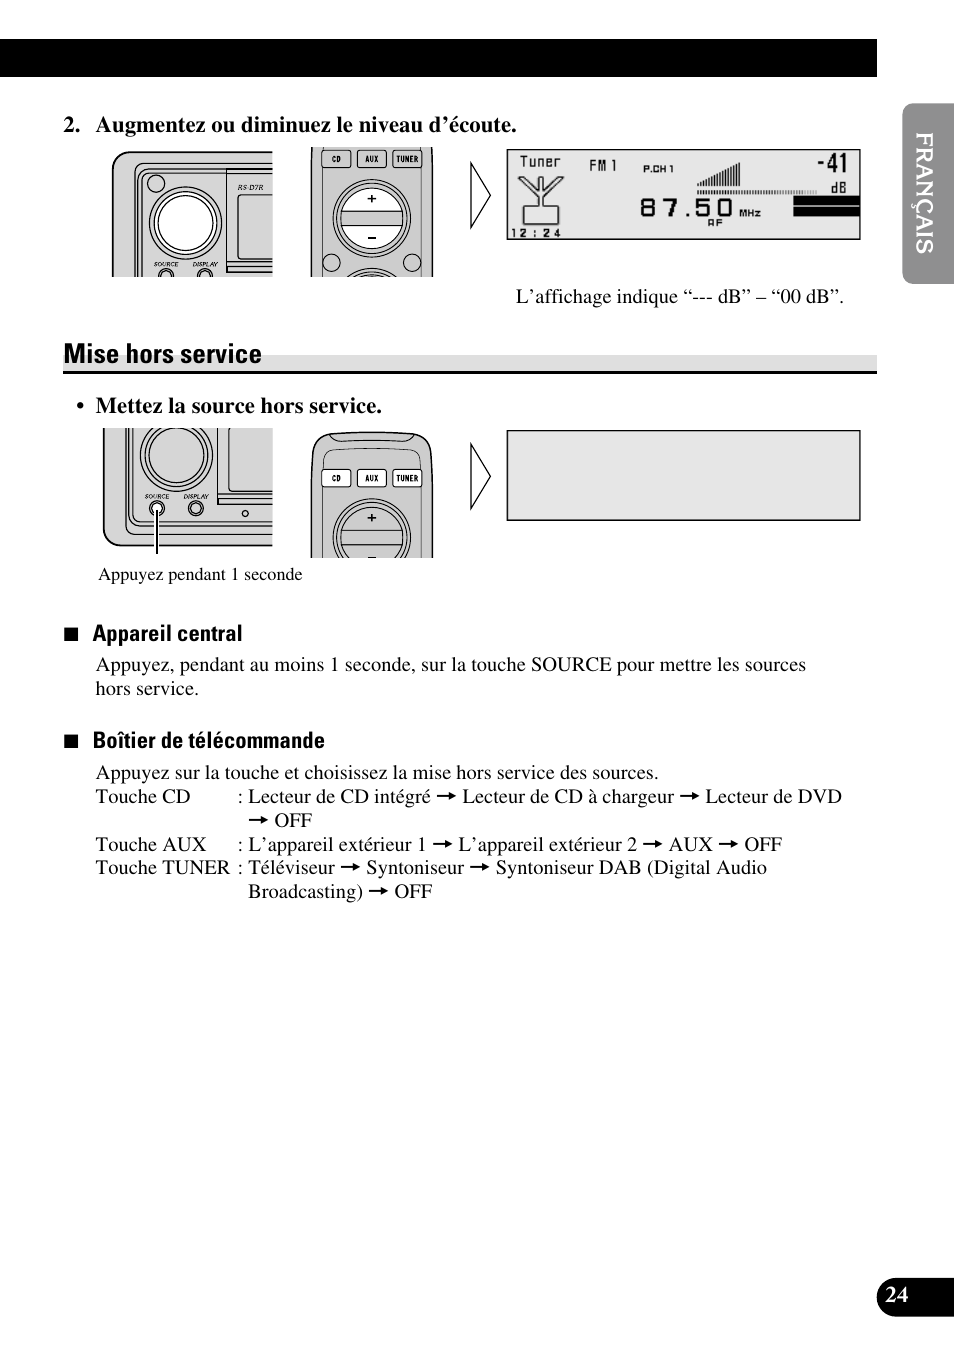 Mise hors service | Pioneer RS-D7R Manuel d'utilisation | Page 25 / 91